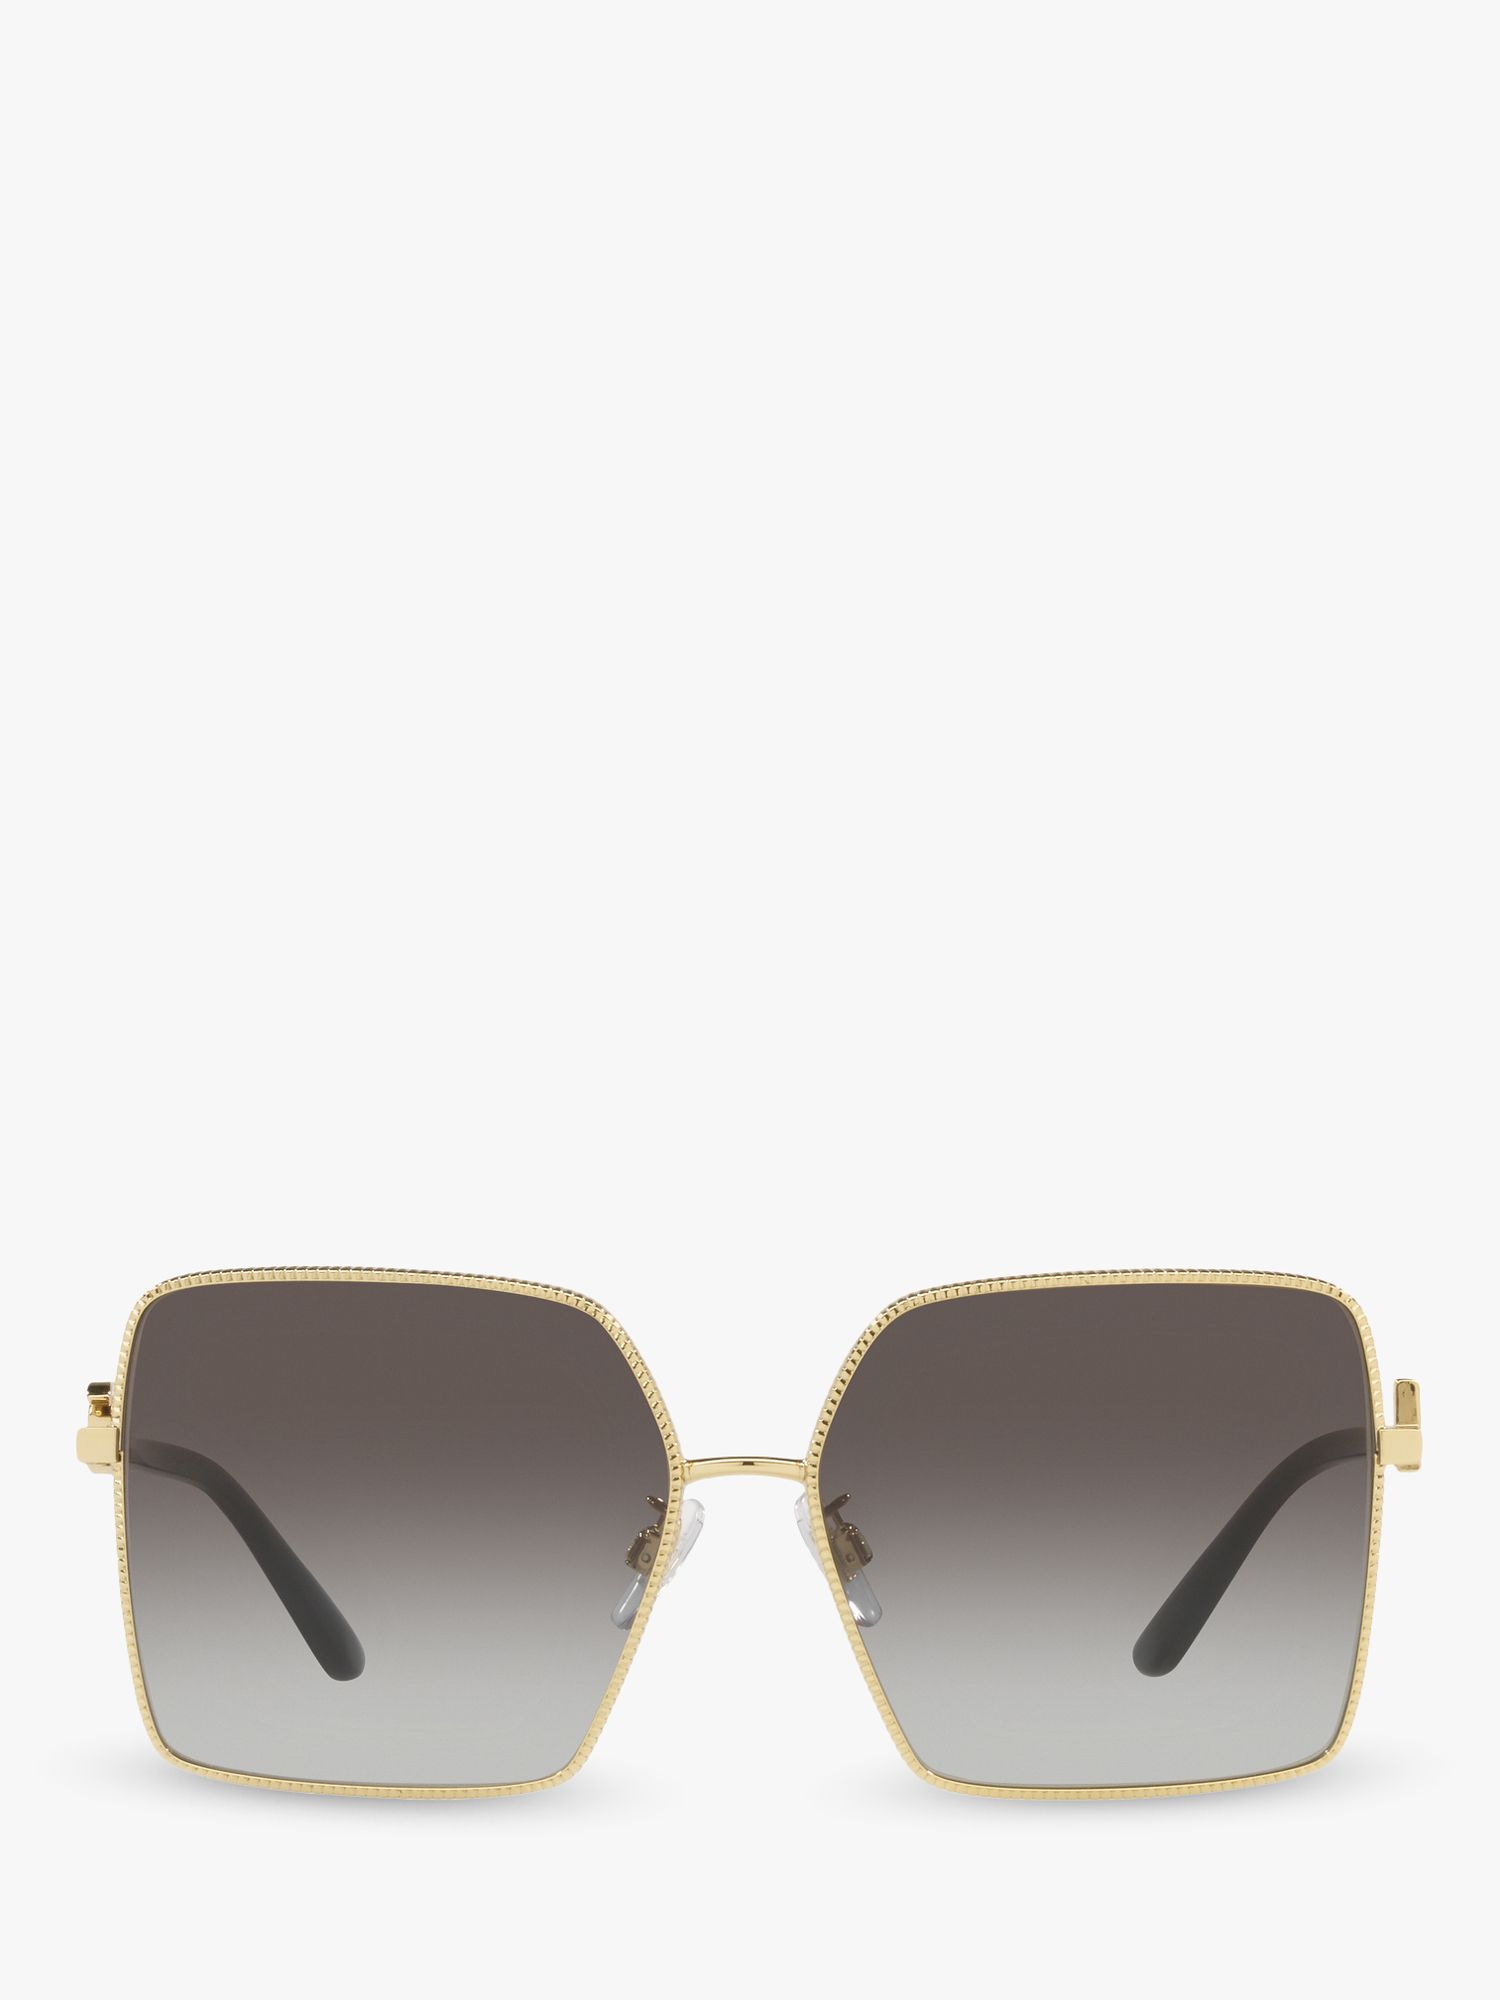 Dolce & Gabbana DG227902 Women's Square Sunglasses, Gold/Grey